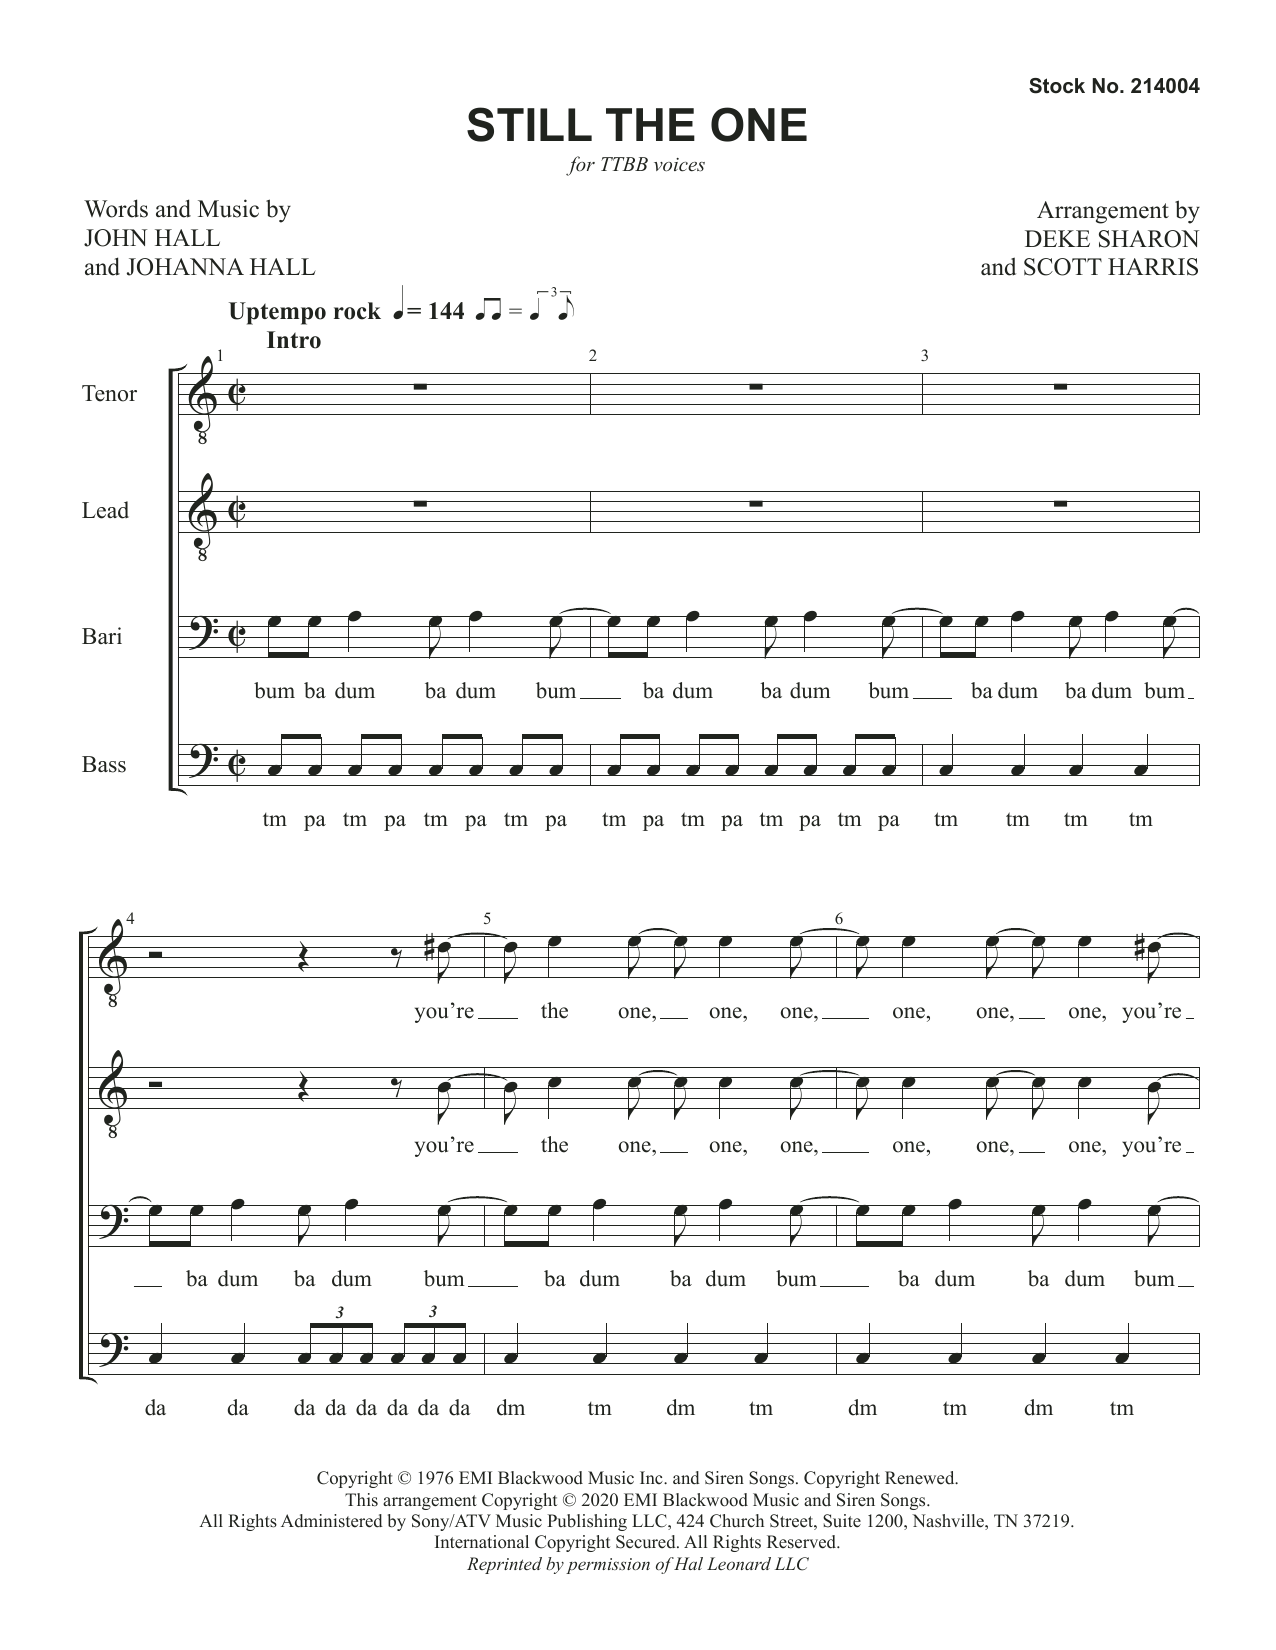 John Hall & Johanna Hall Still The One (arr. Deke Sharon & Scott Harris) Sheet Music Notes & Chords for SSAA Choir - Download or Print PDF